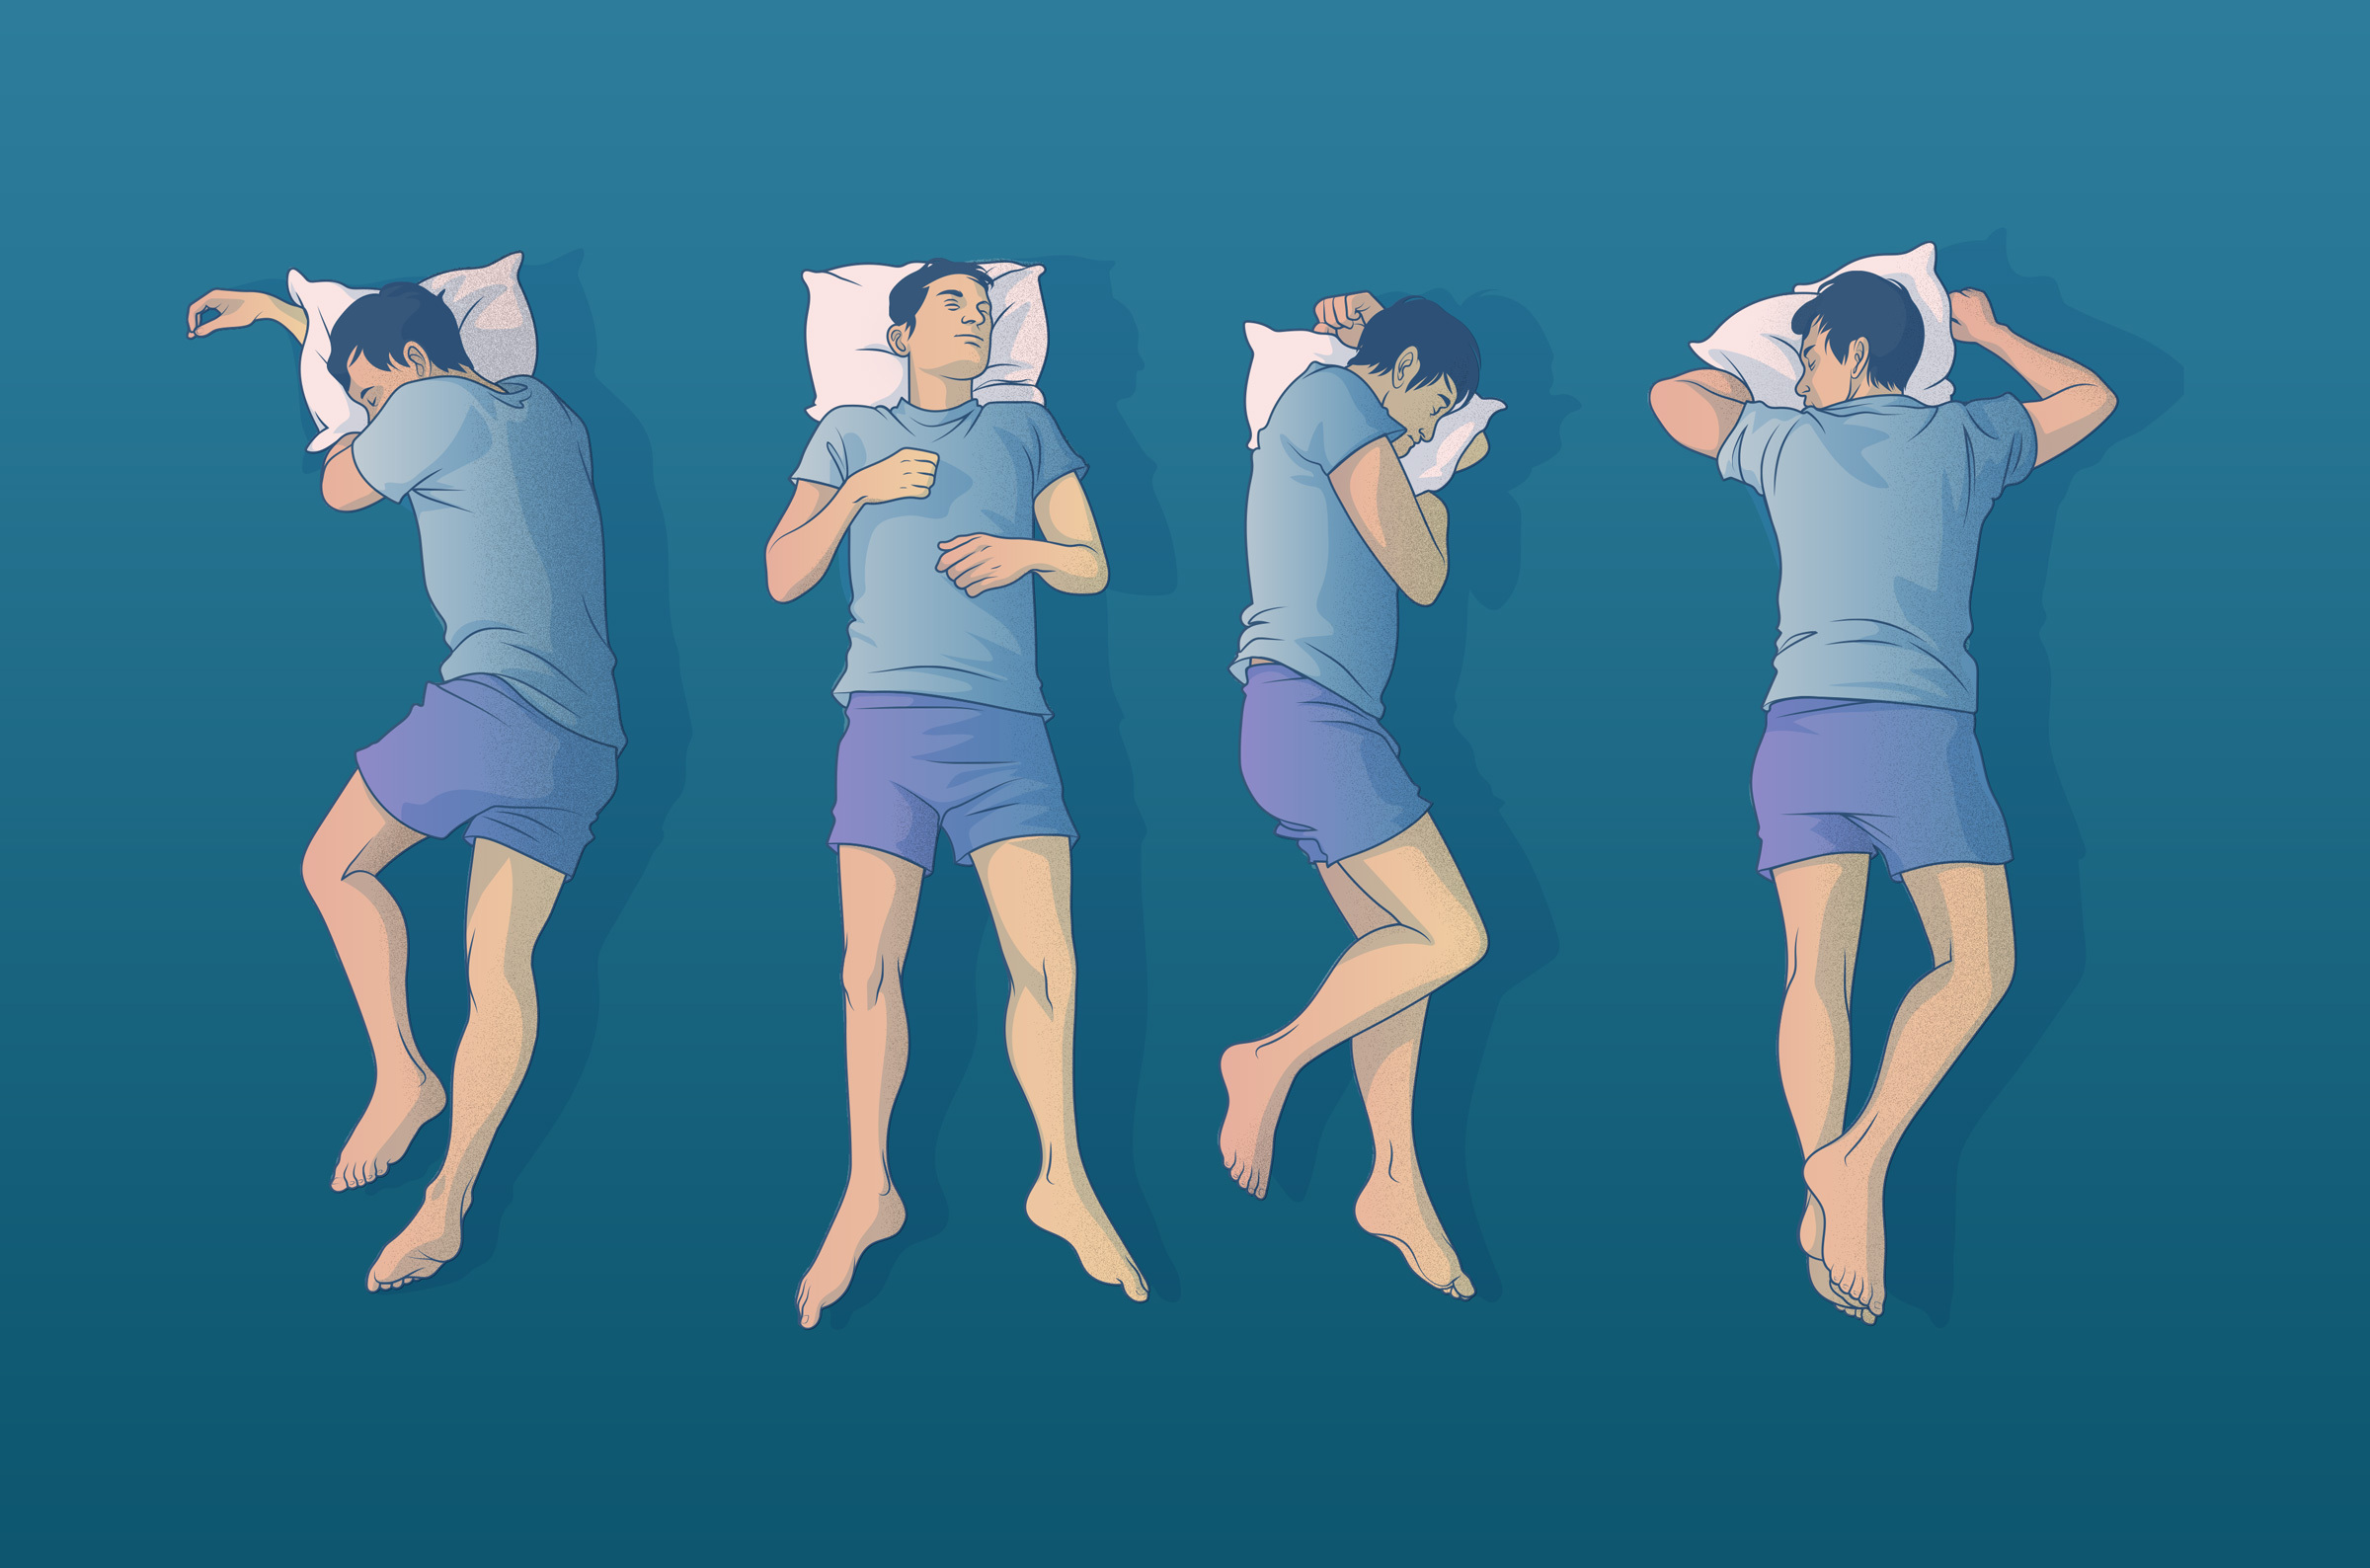 Side Sleeper Guide: How to Sleep on Your Side